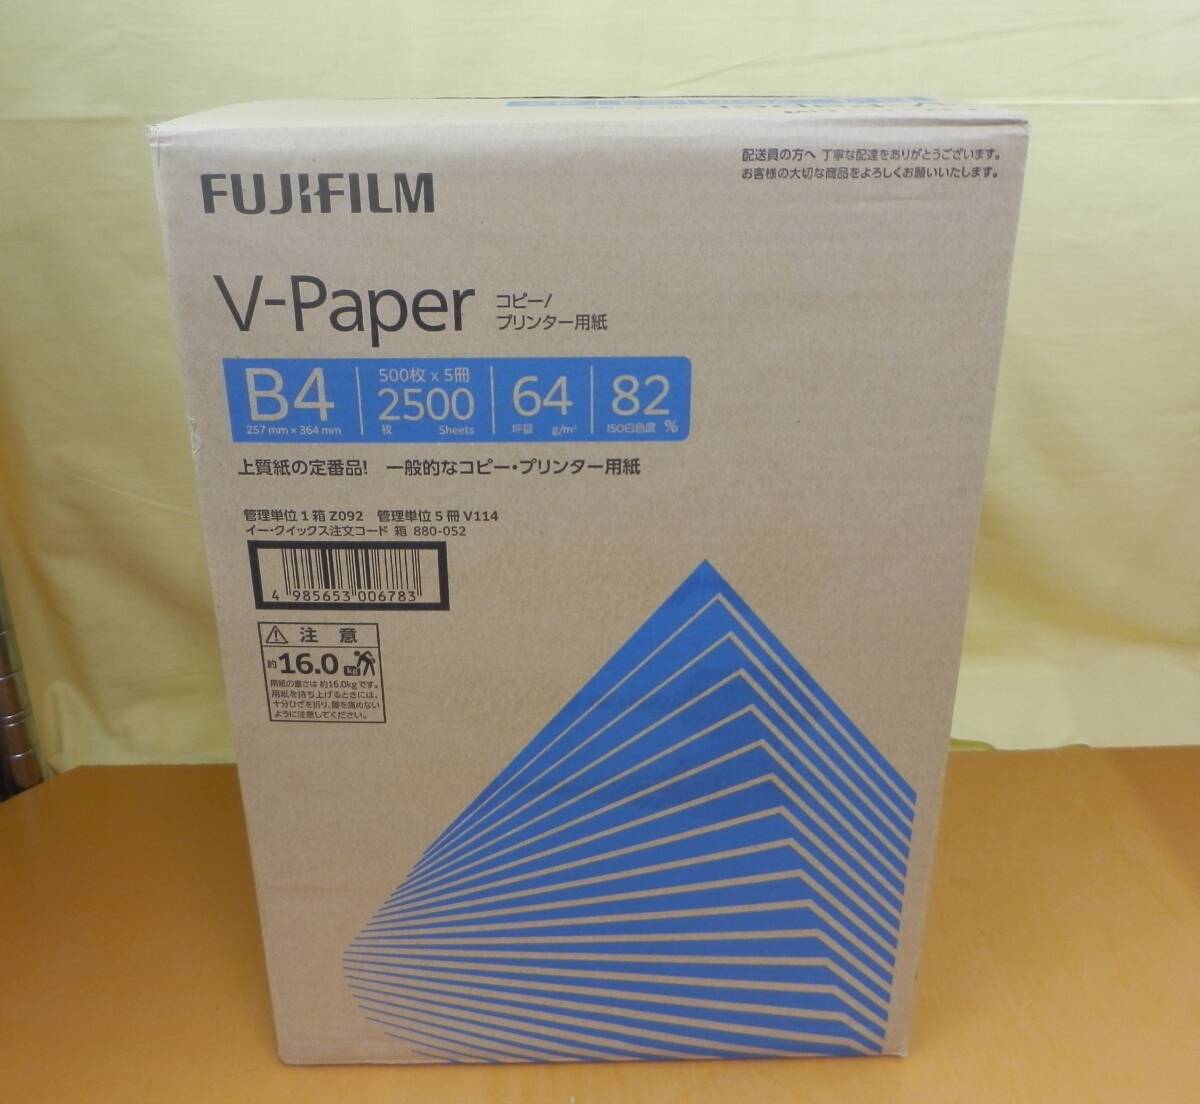 ☆3176 FUJIFILM V-Paper コピー用紙 B4 500枚×5冊 新品未使用品 _画像1